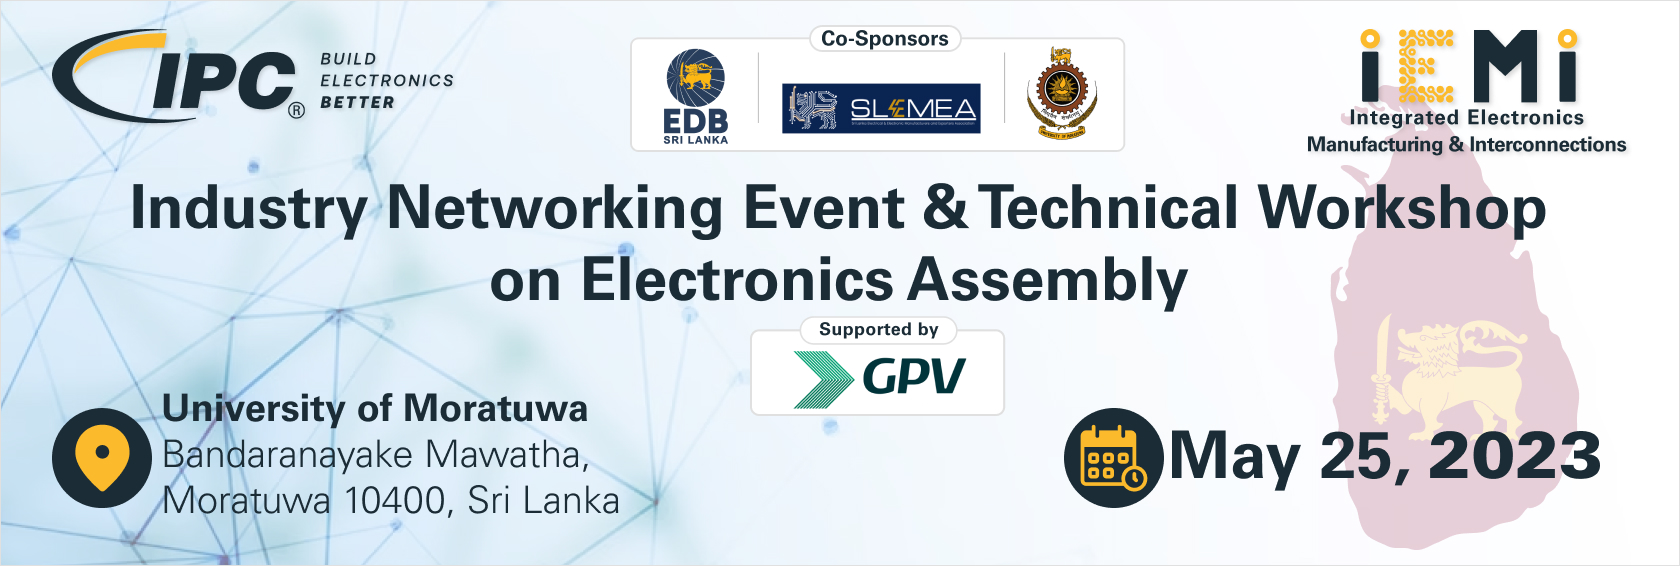 IPC networking event Srilanka may 25 1680x566.jpg